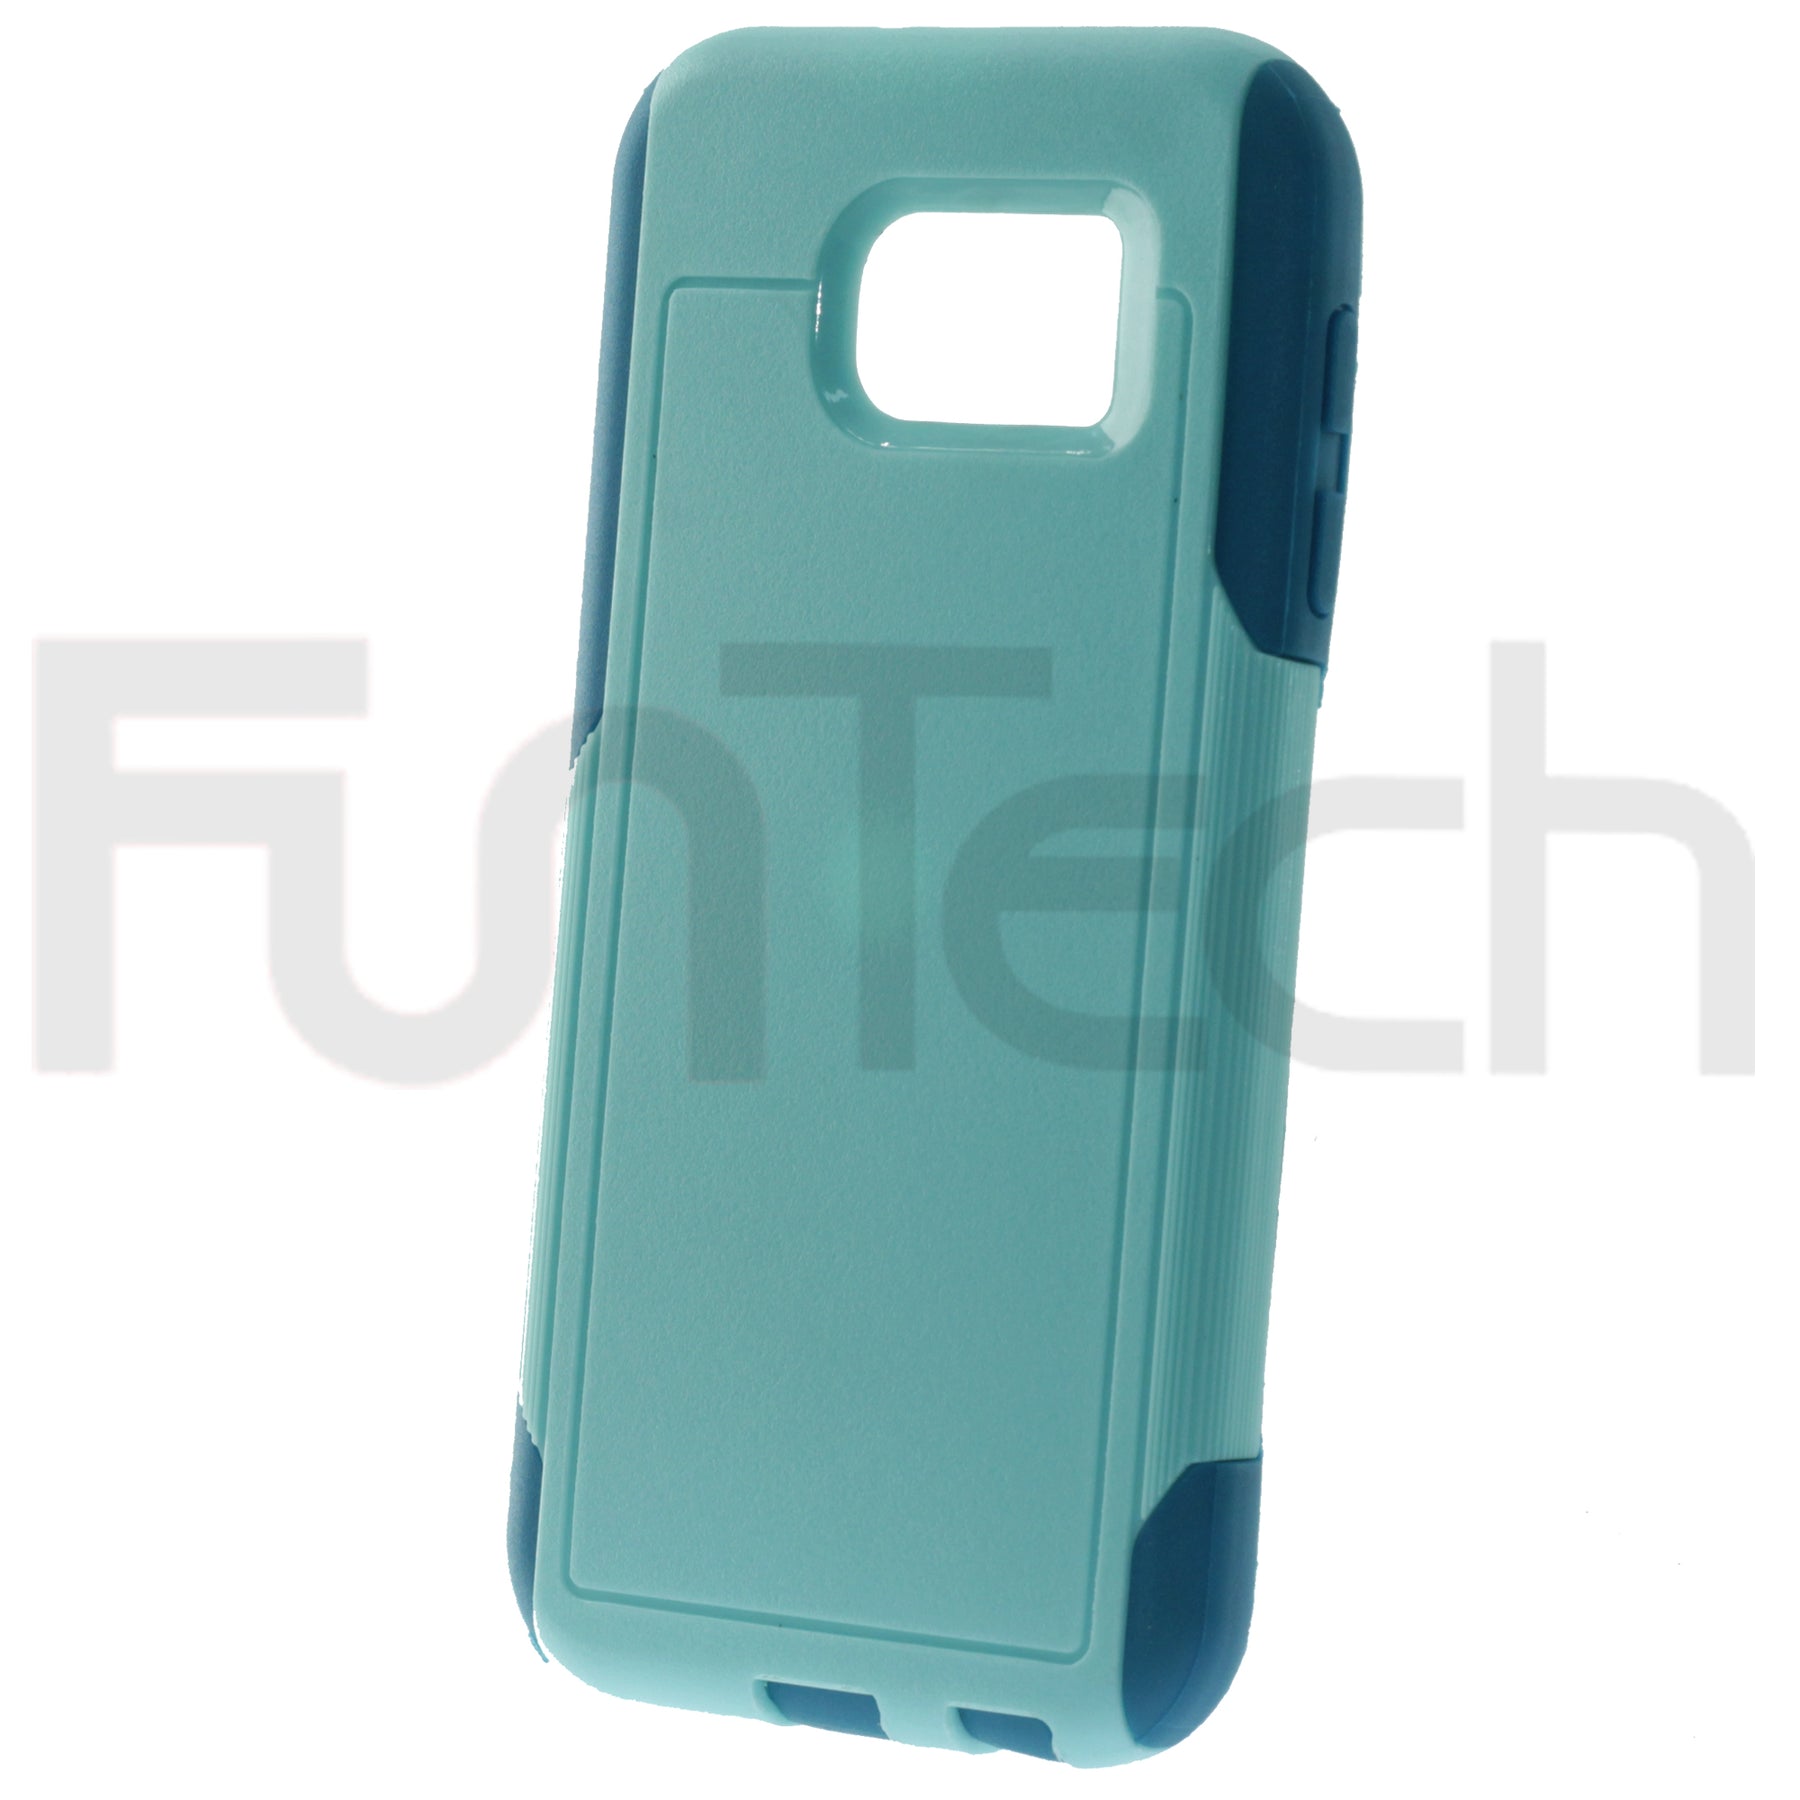 Samsung S6, Commuter Series Cover Case, Color Light Blue.